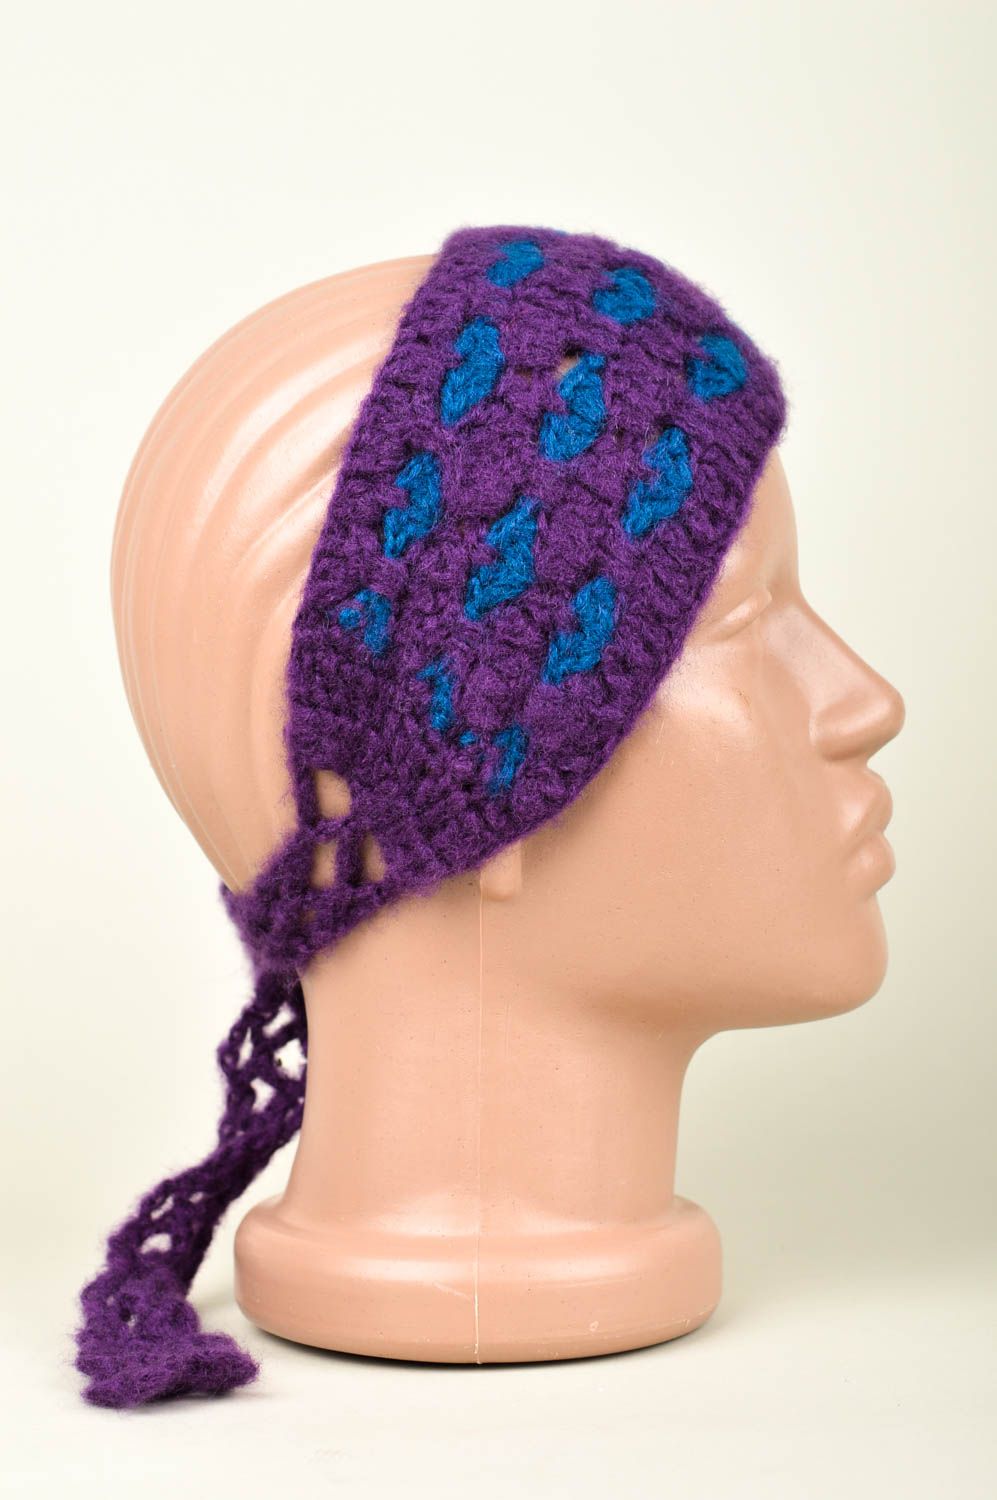 Handmade crochet headband crochet ideas head accessories for kids small gifts photo 2